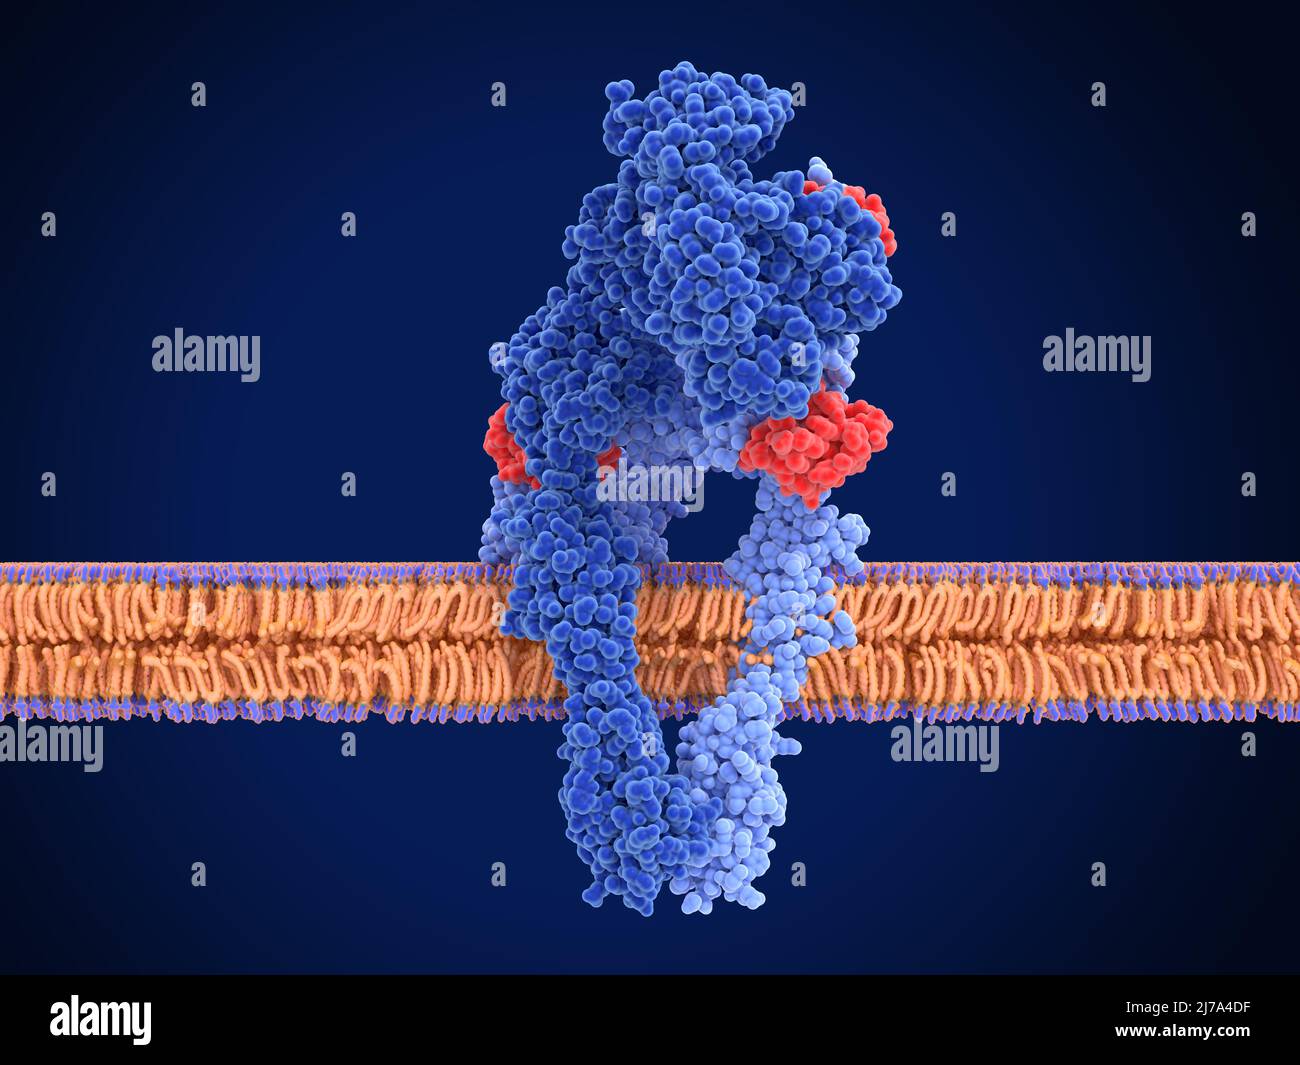 Active insulin receptor, illustration Stock Photo